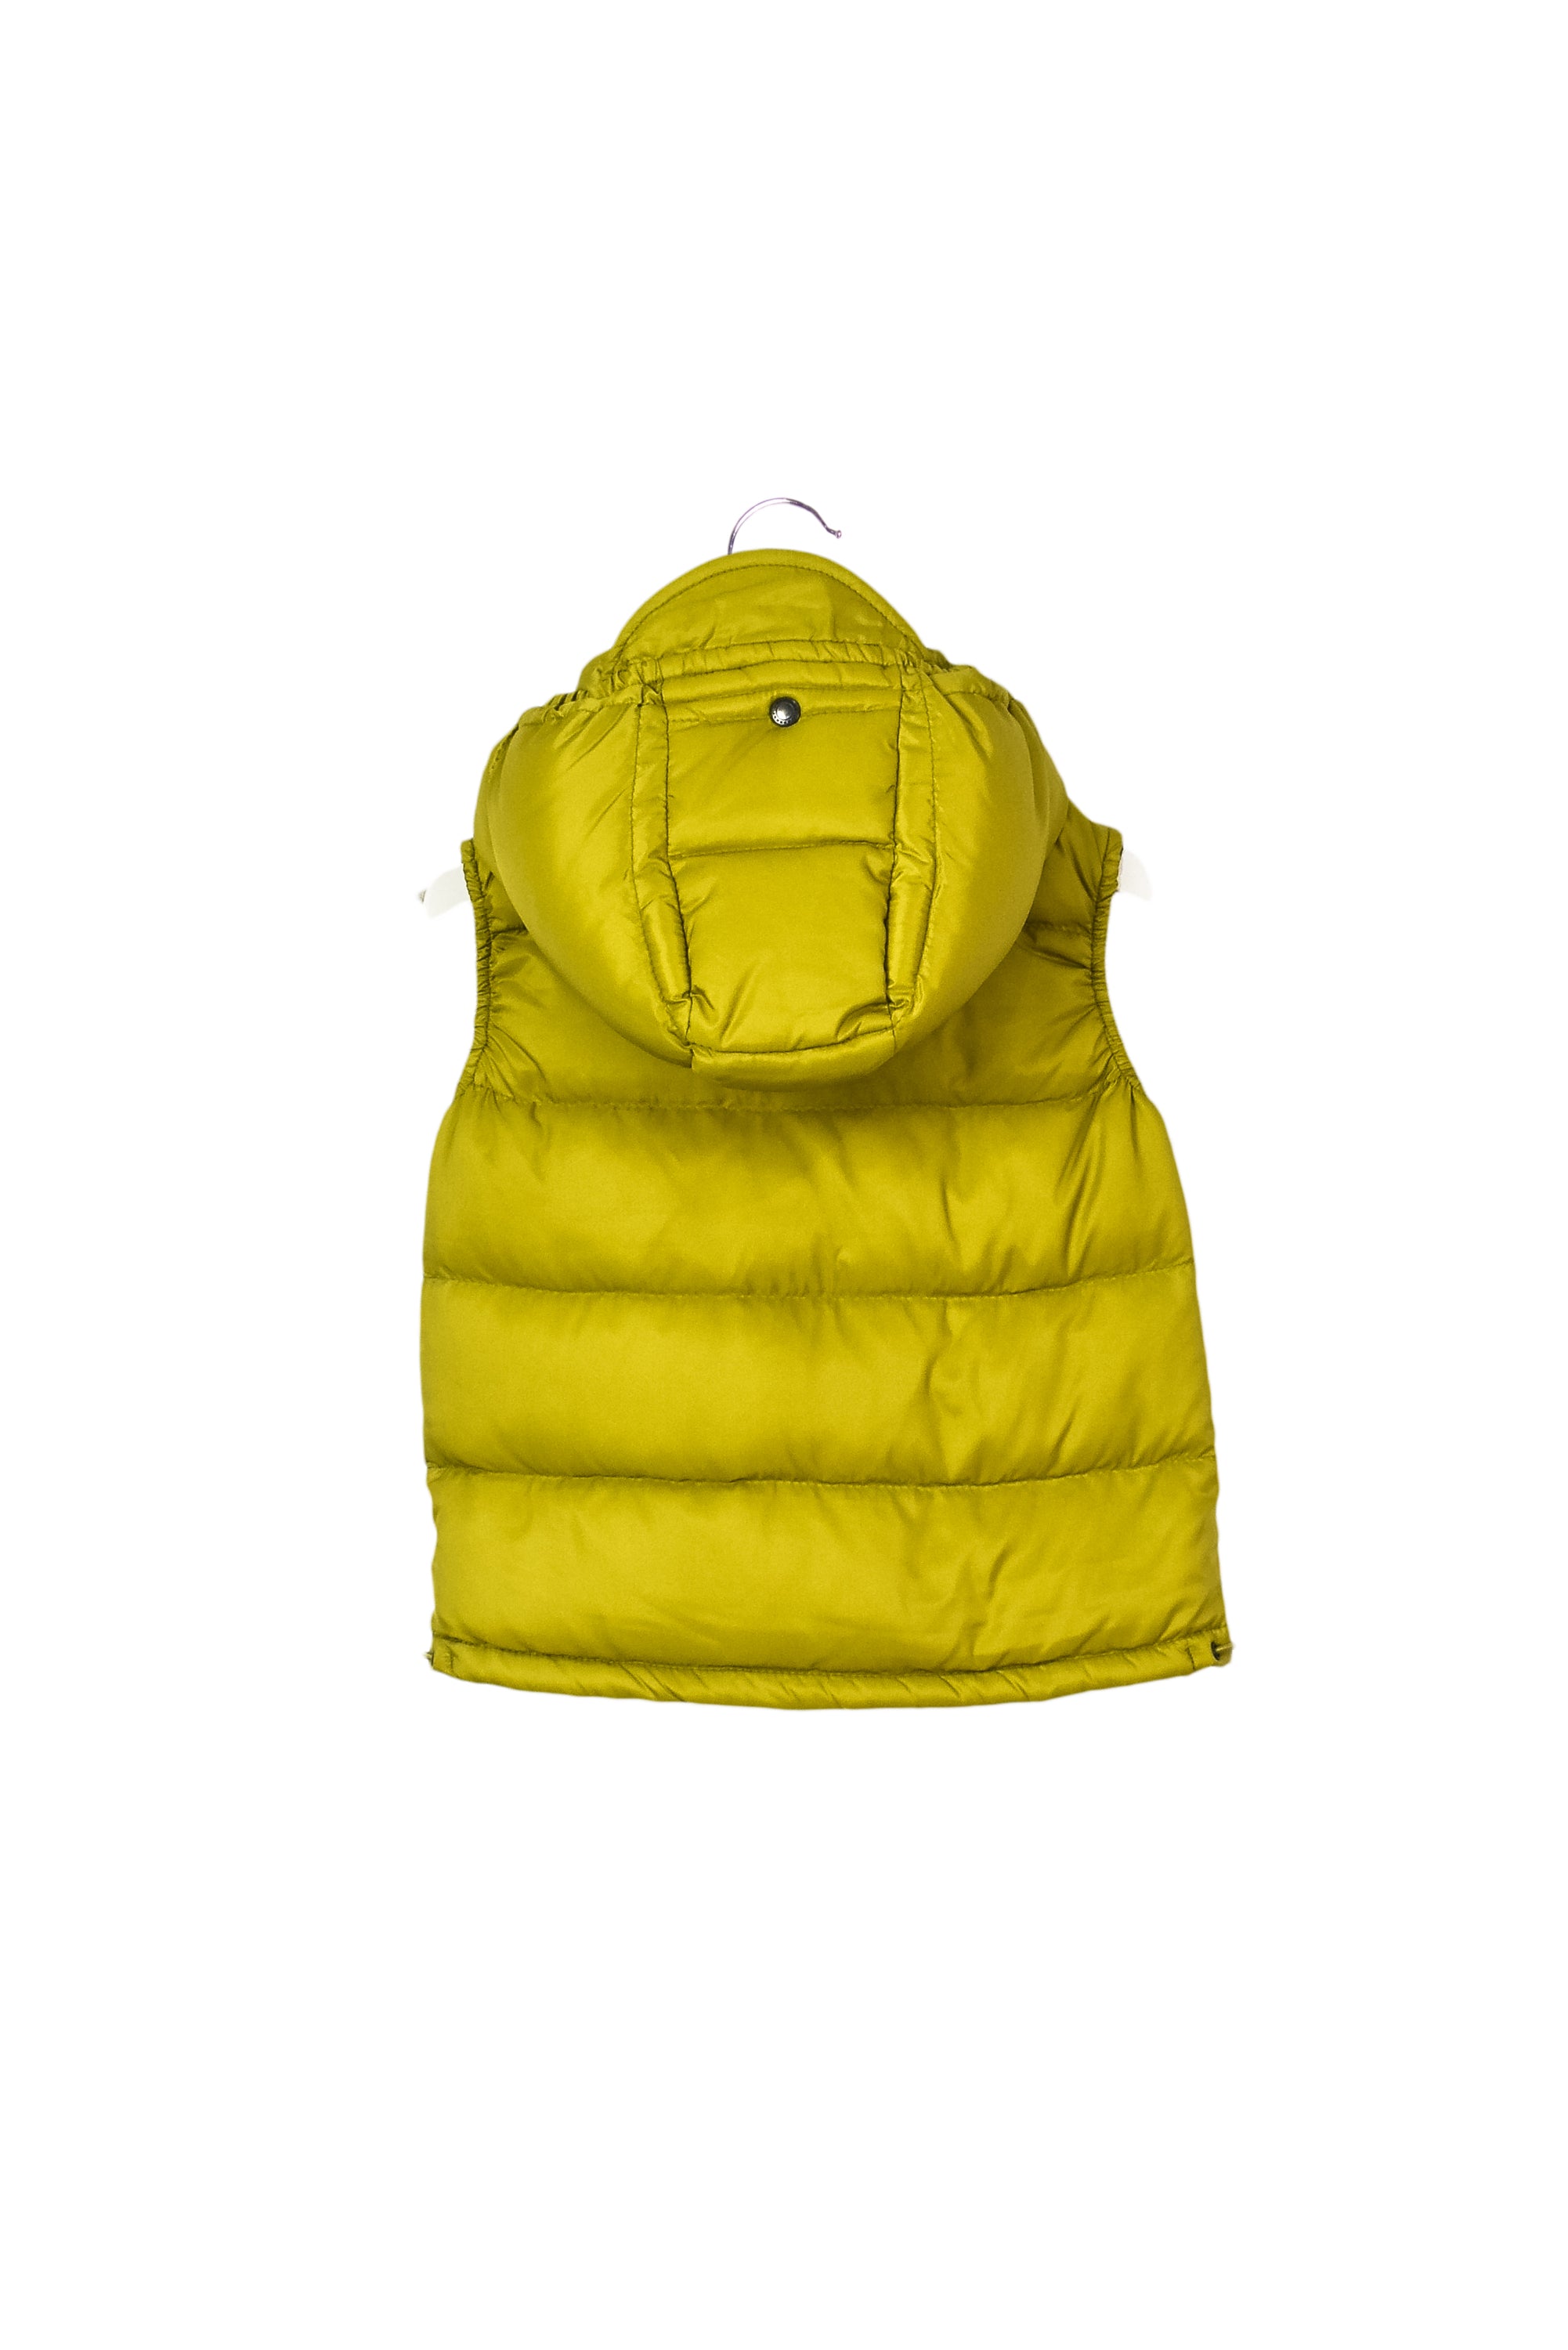 burberry vest kids yellow